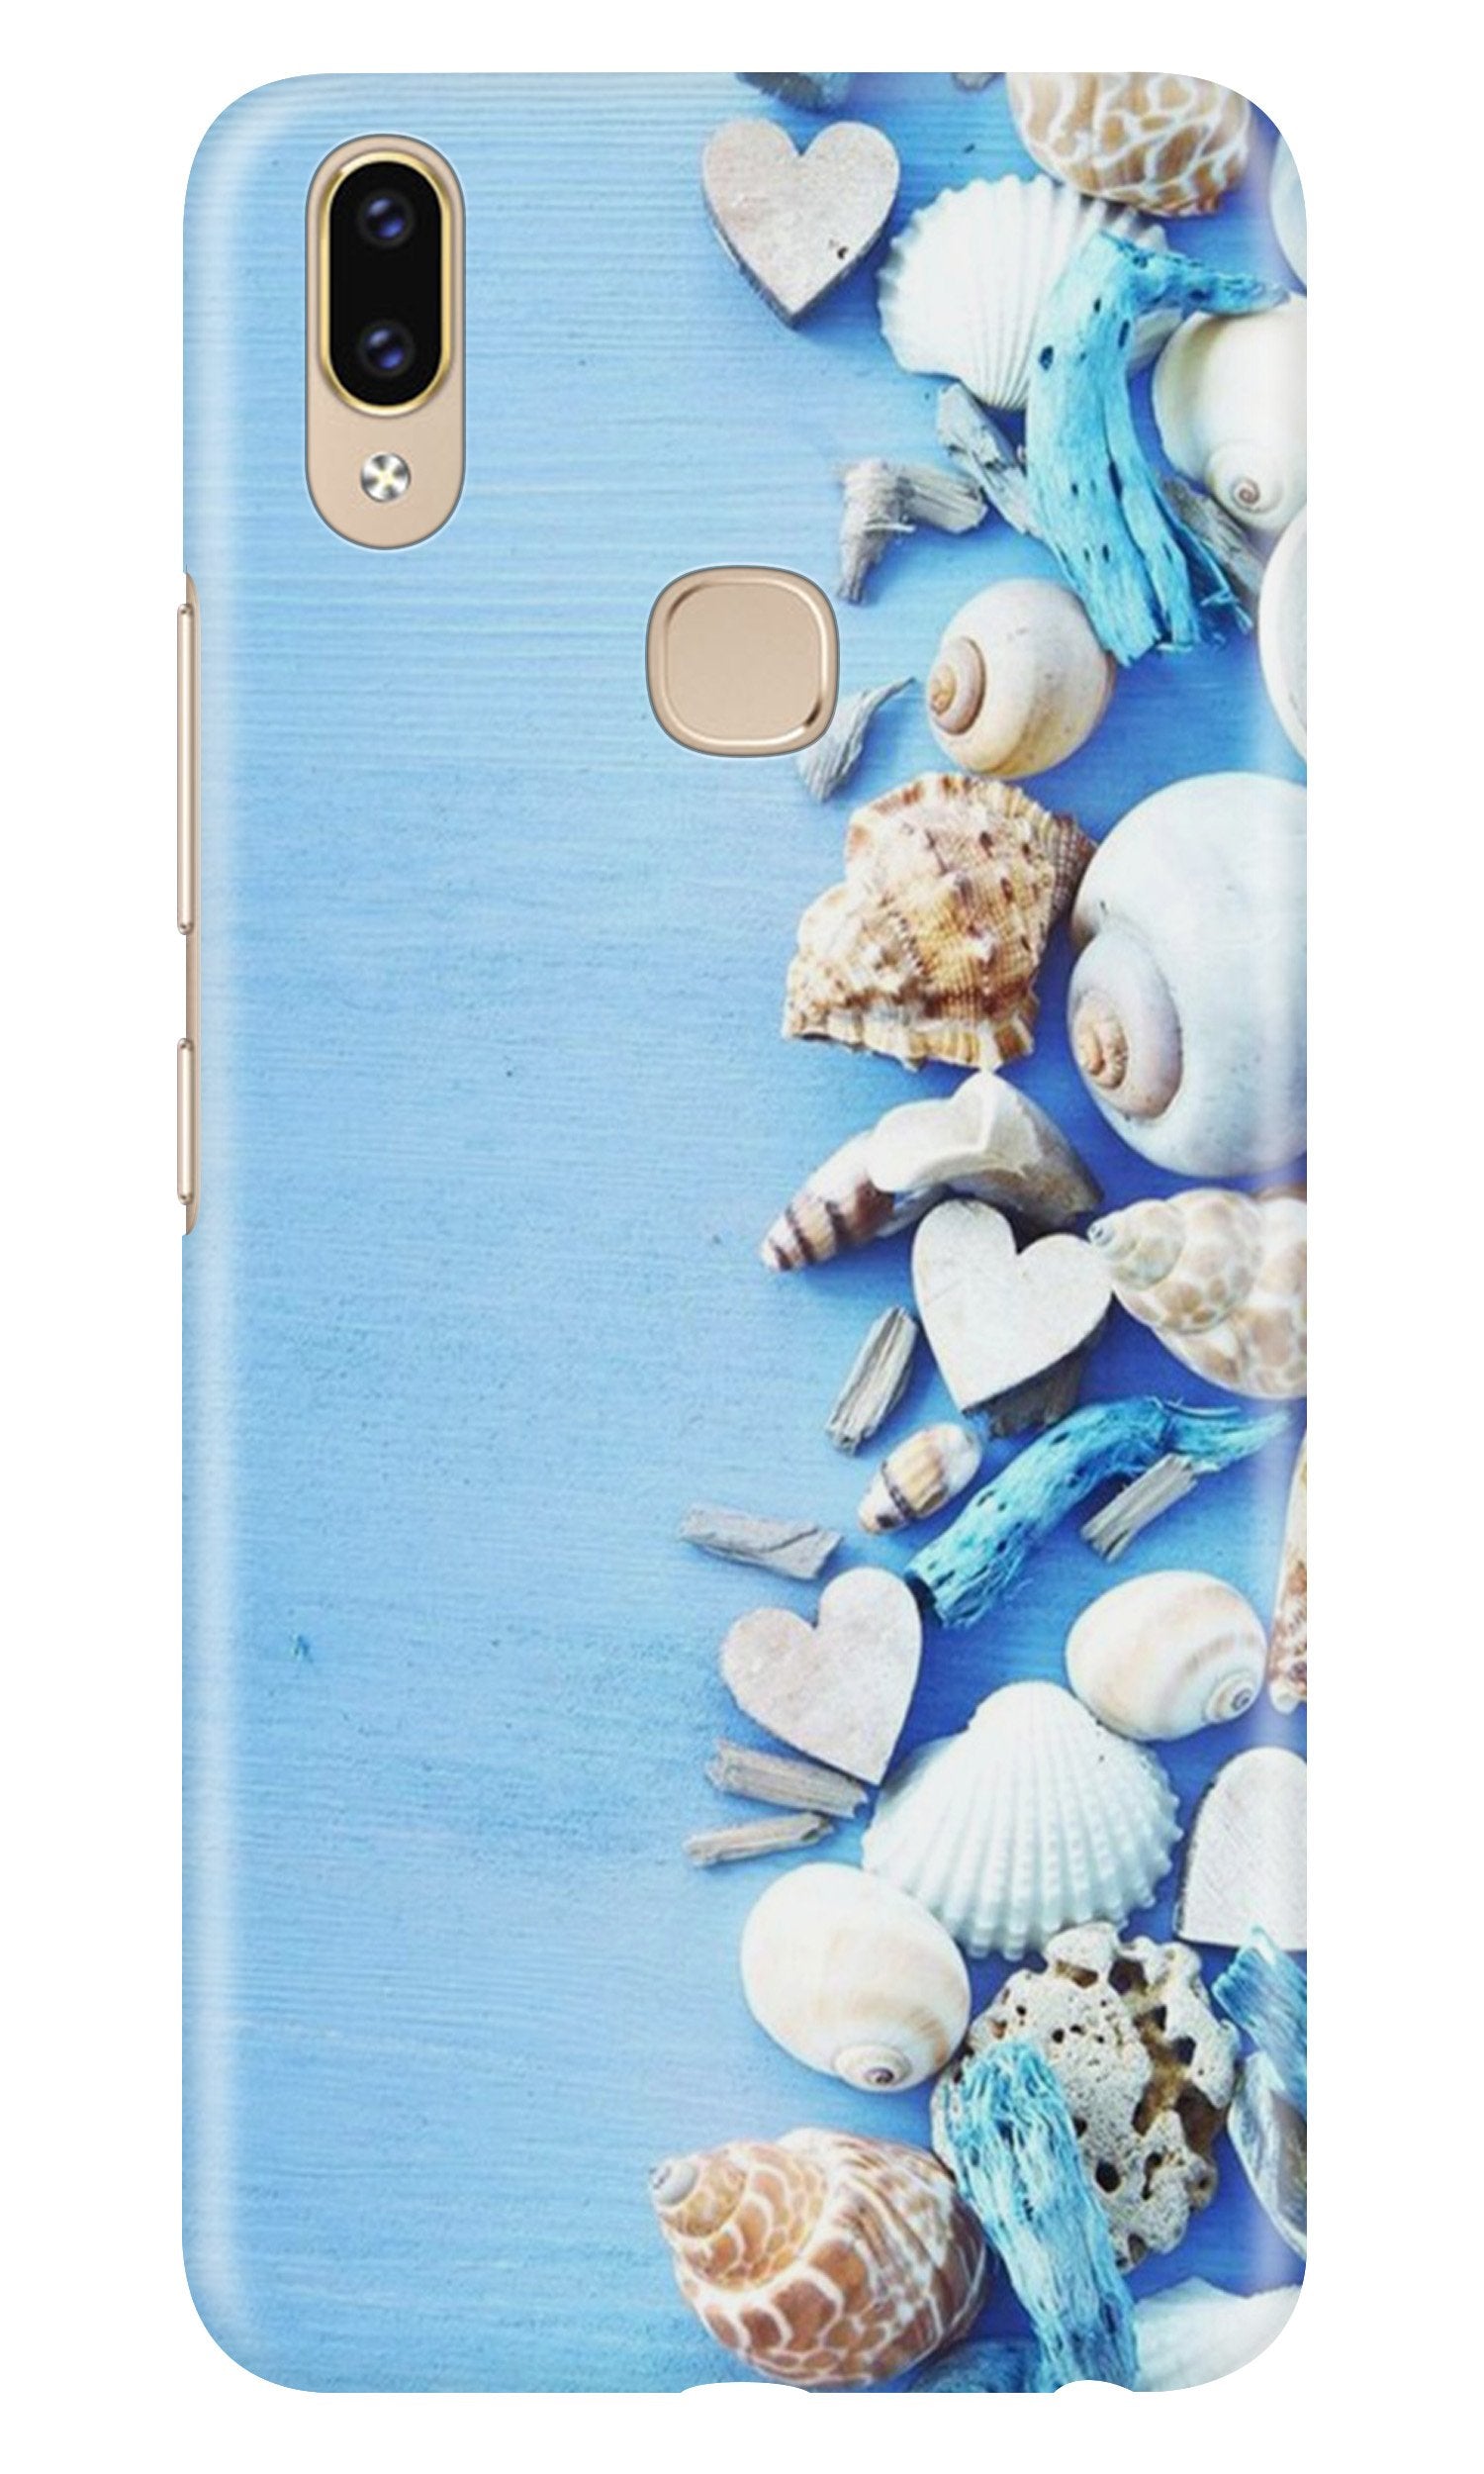 Sea Shells2 Case for Asus Zenfone Max M2